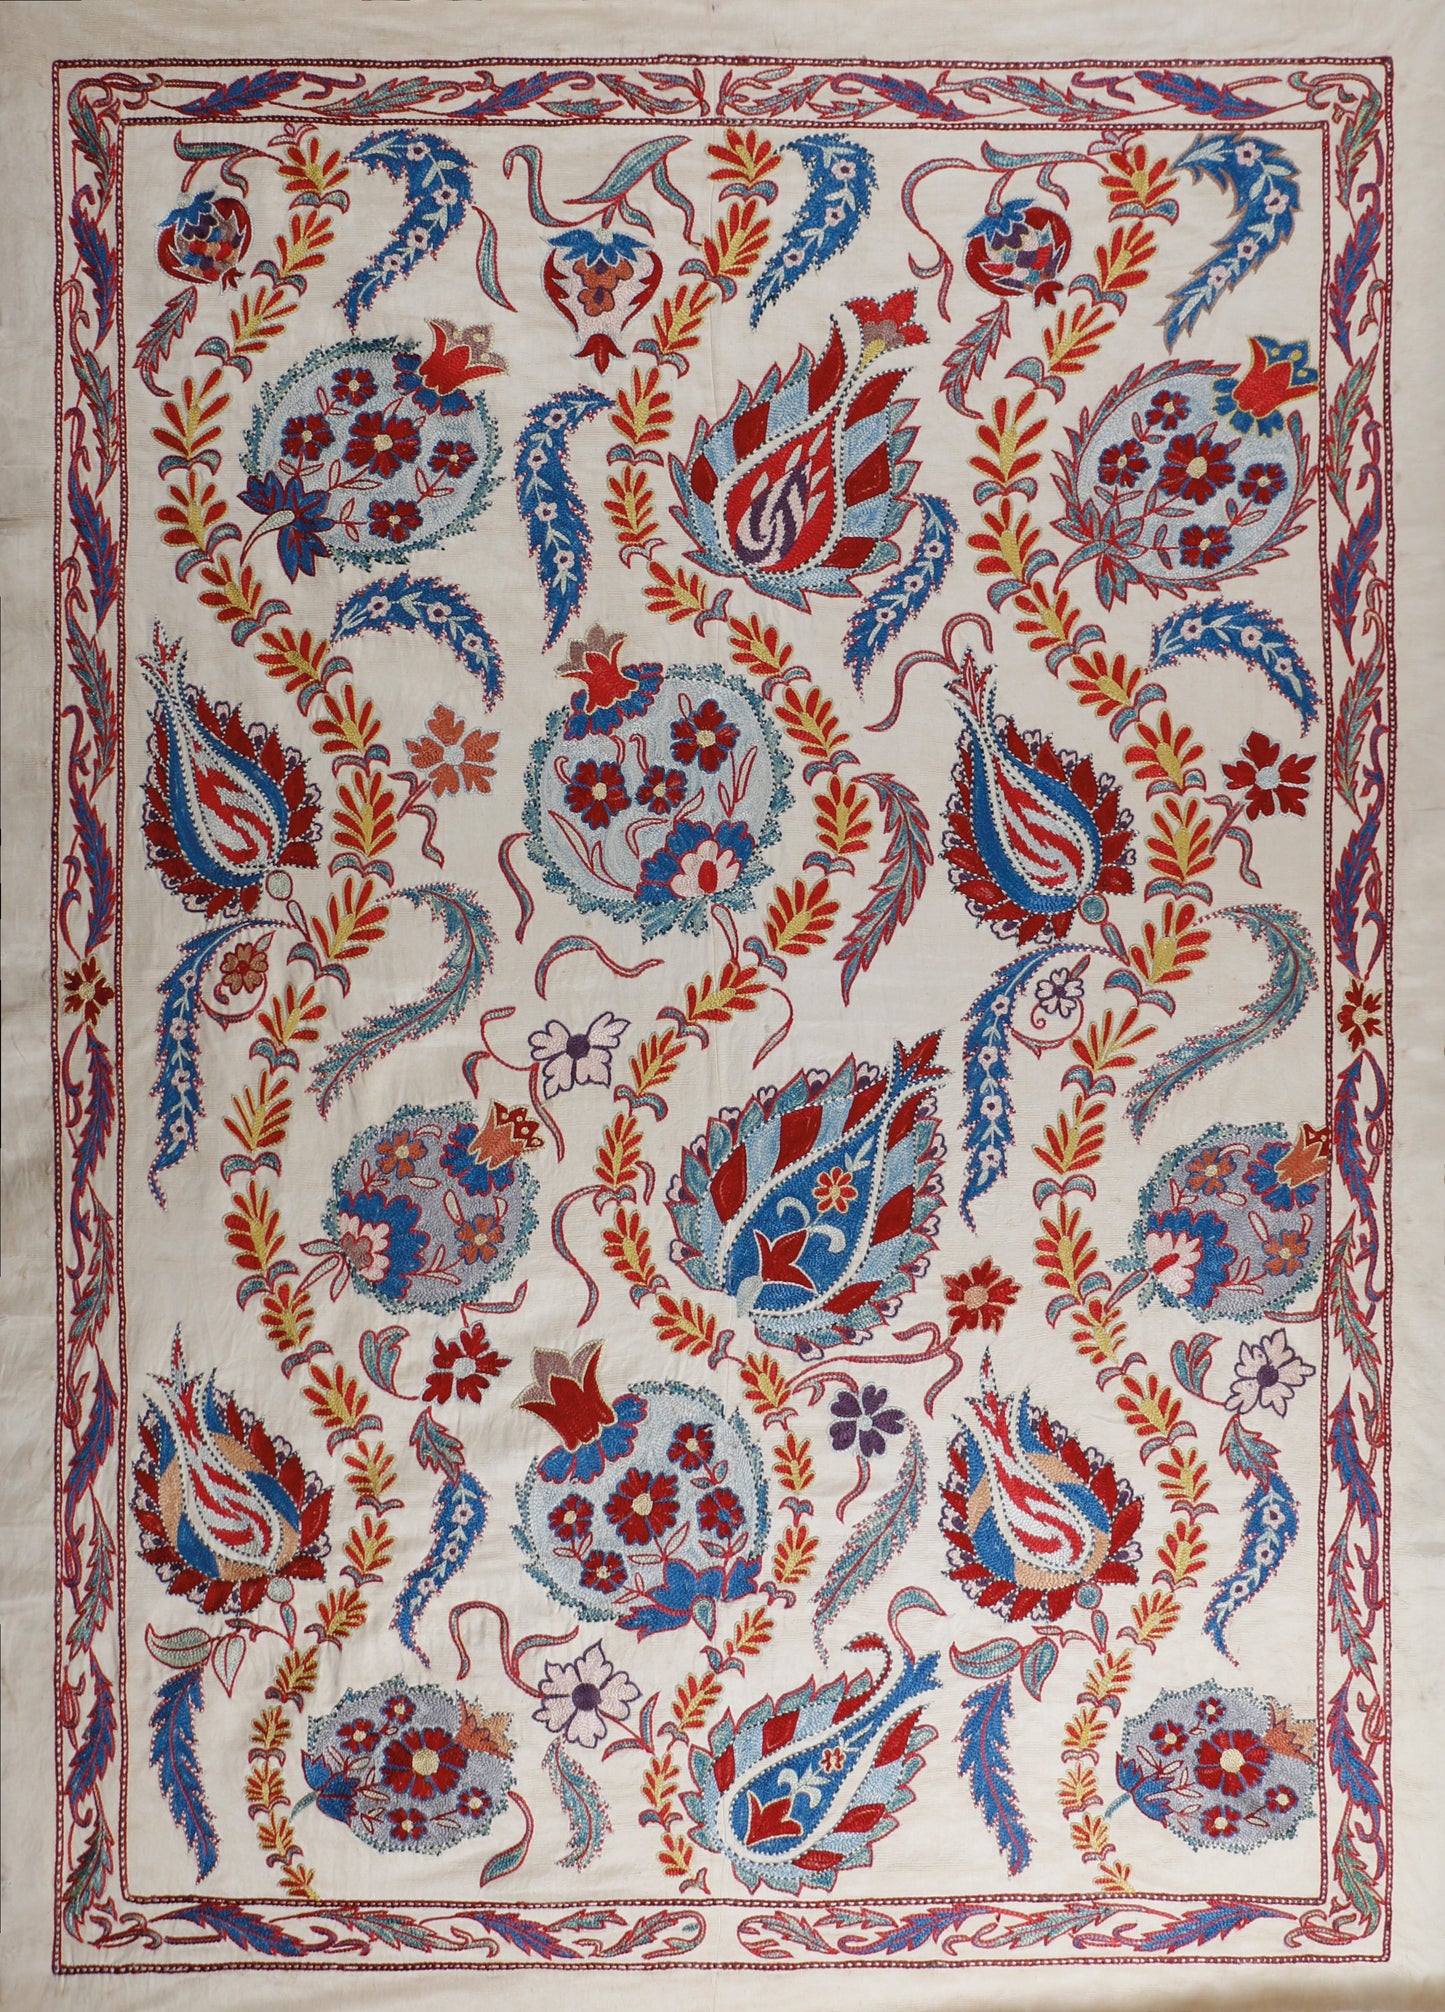 Ottoman Silk Sultan's Garden Embroidered Suzani Tapestry